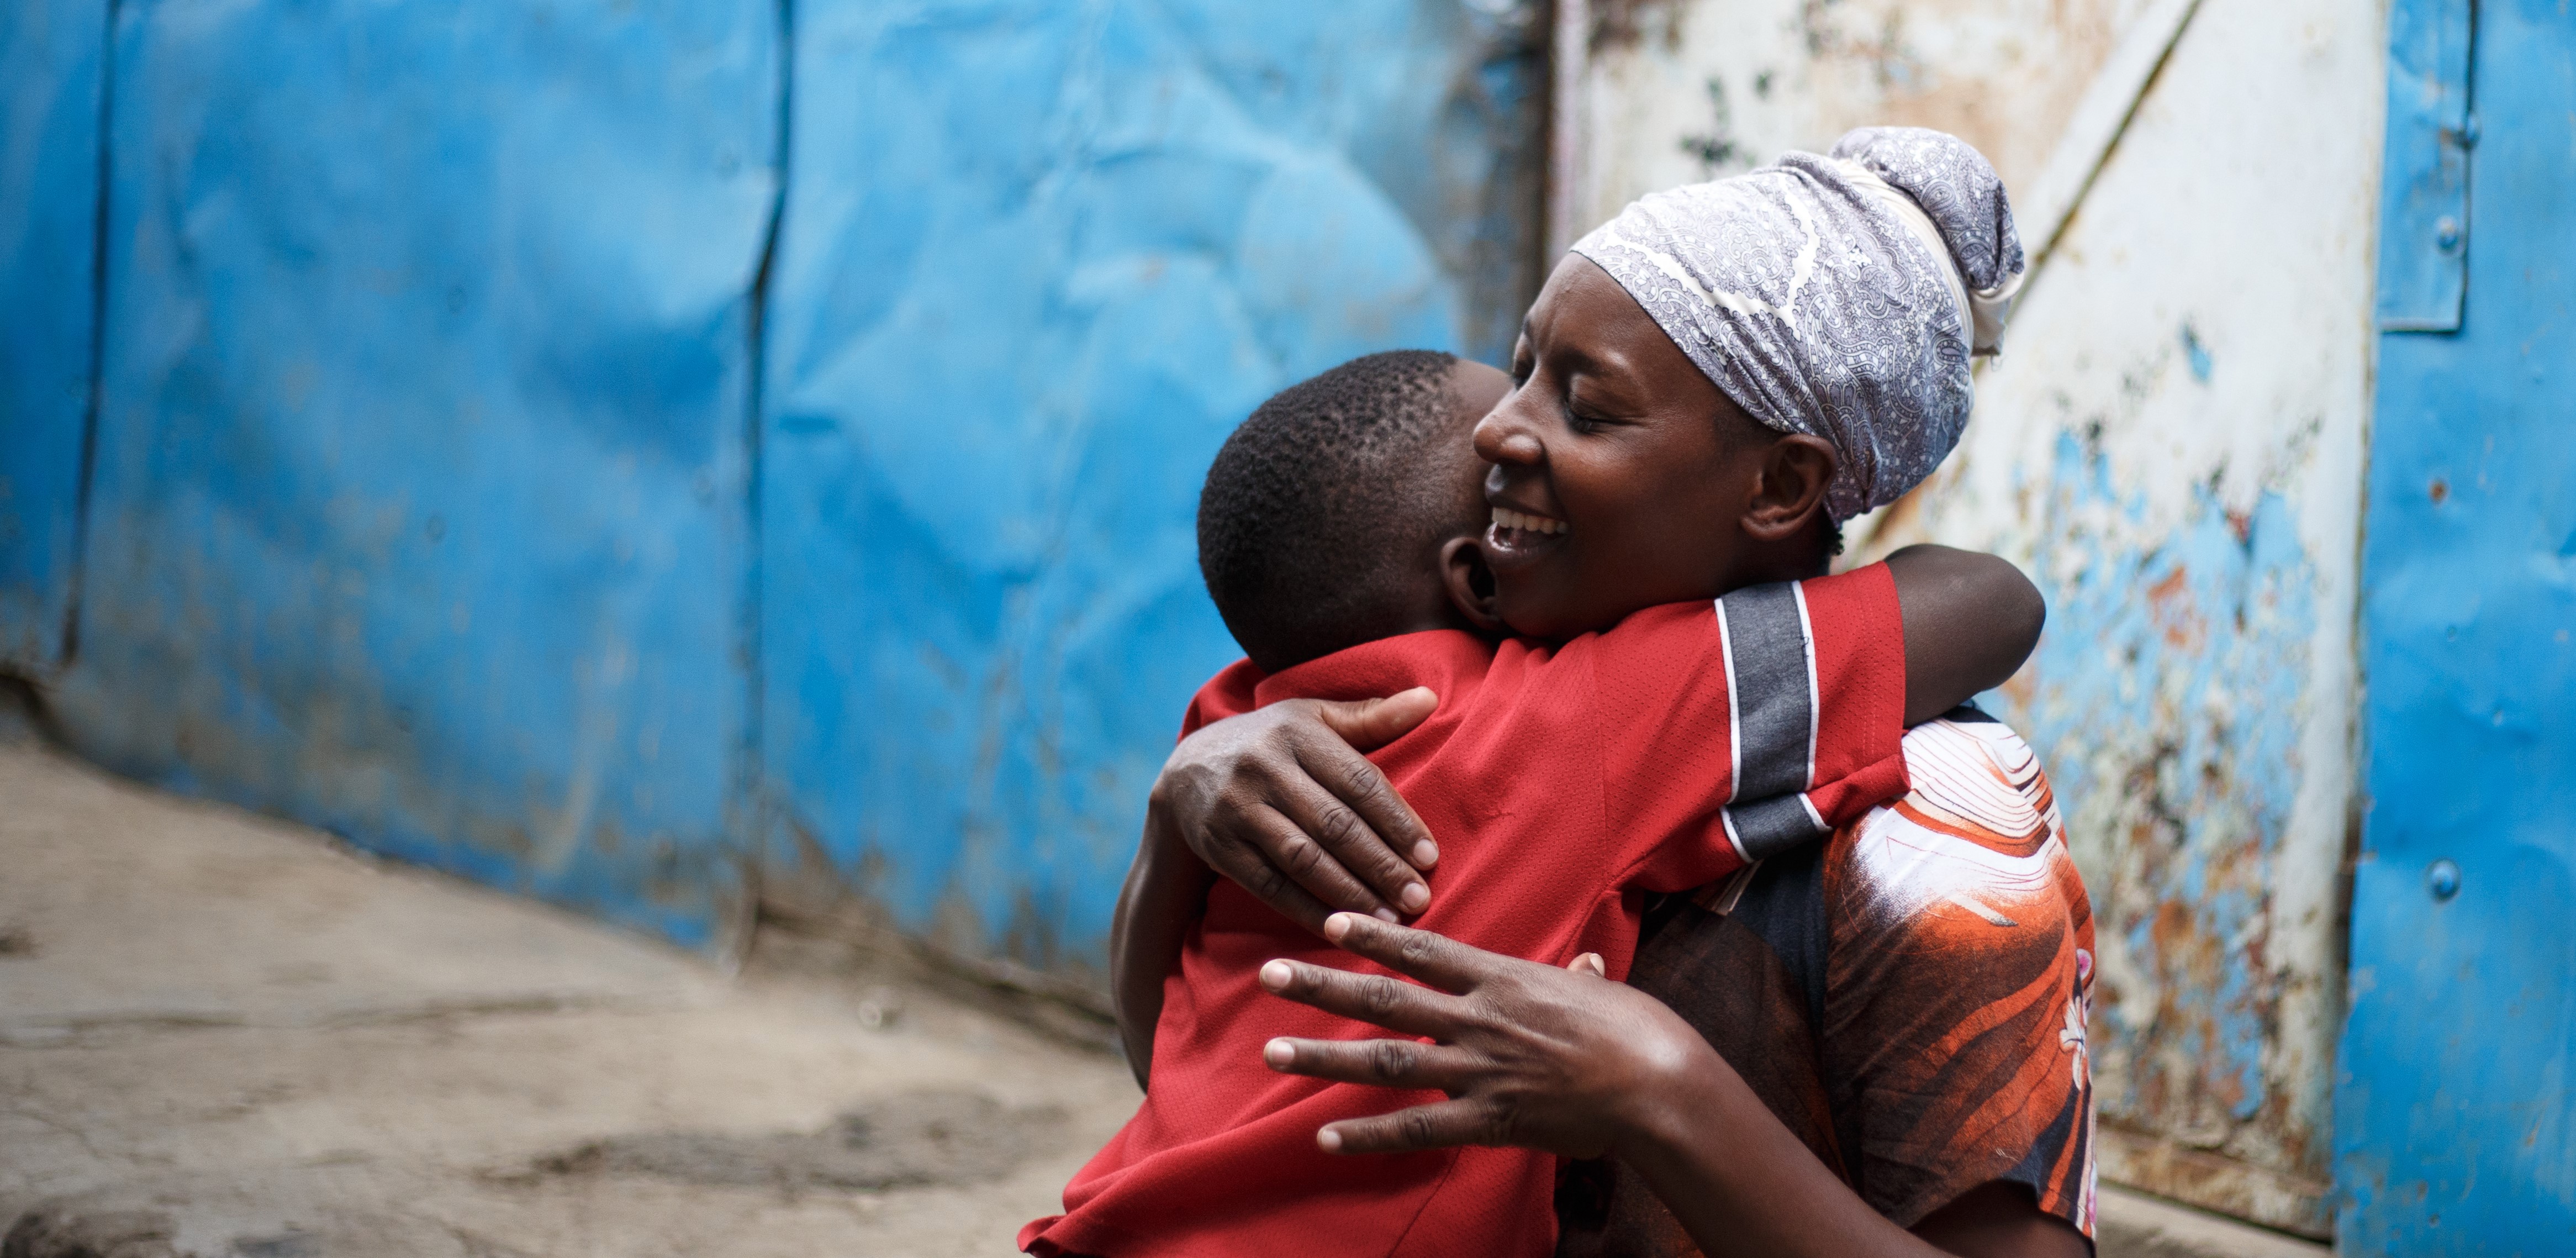 Kenya FS Nairobi 11 boy hugging mother joyful intimate moment bond, Sandra's Story, Jakob Fuhr.jpg